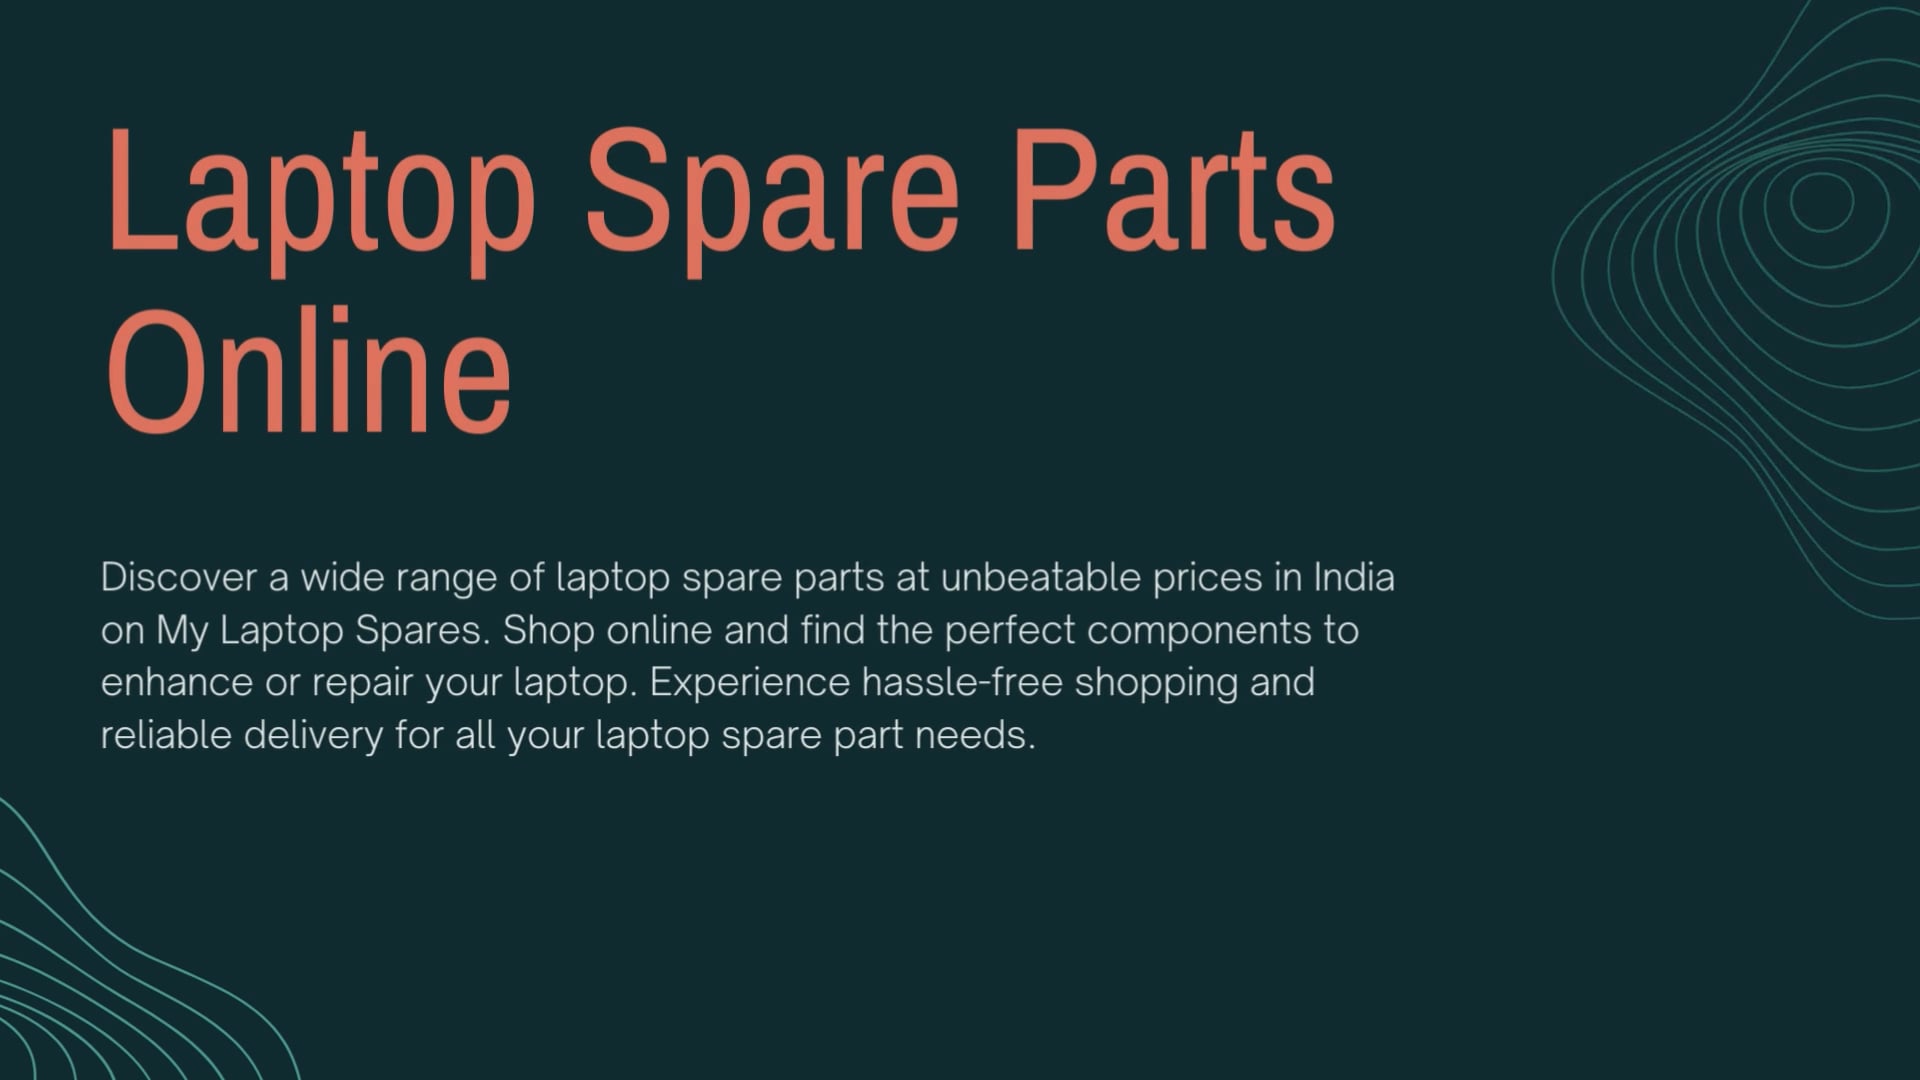 Laptop Spare Parts Online on Vimeo